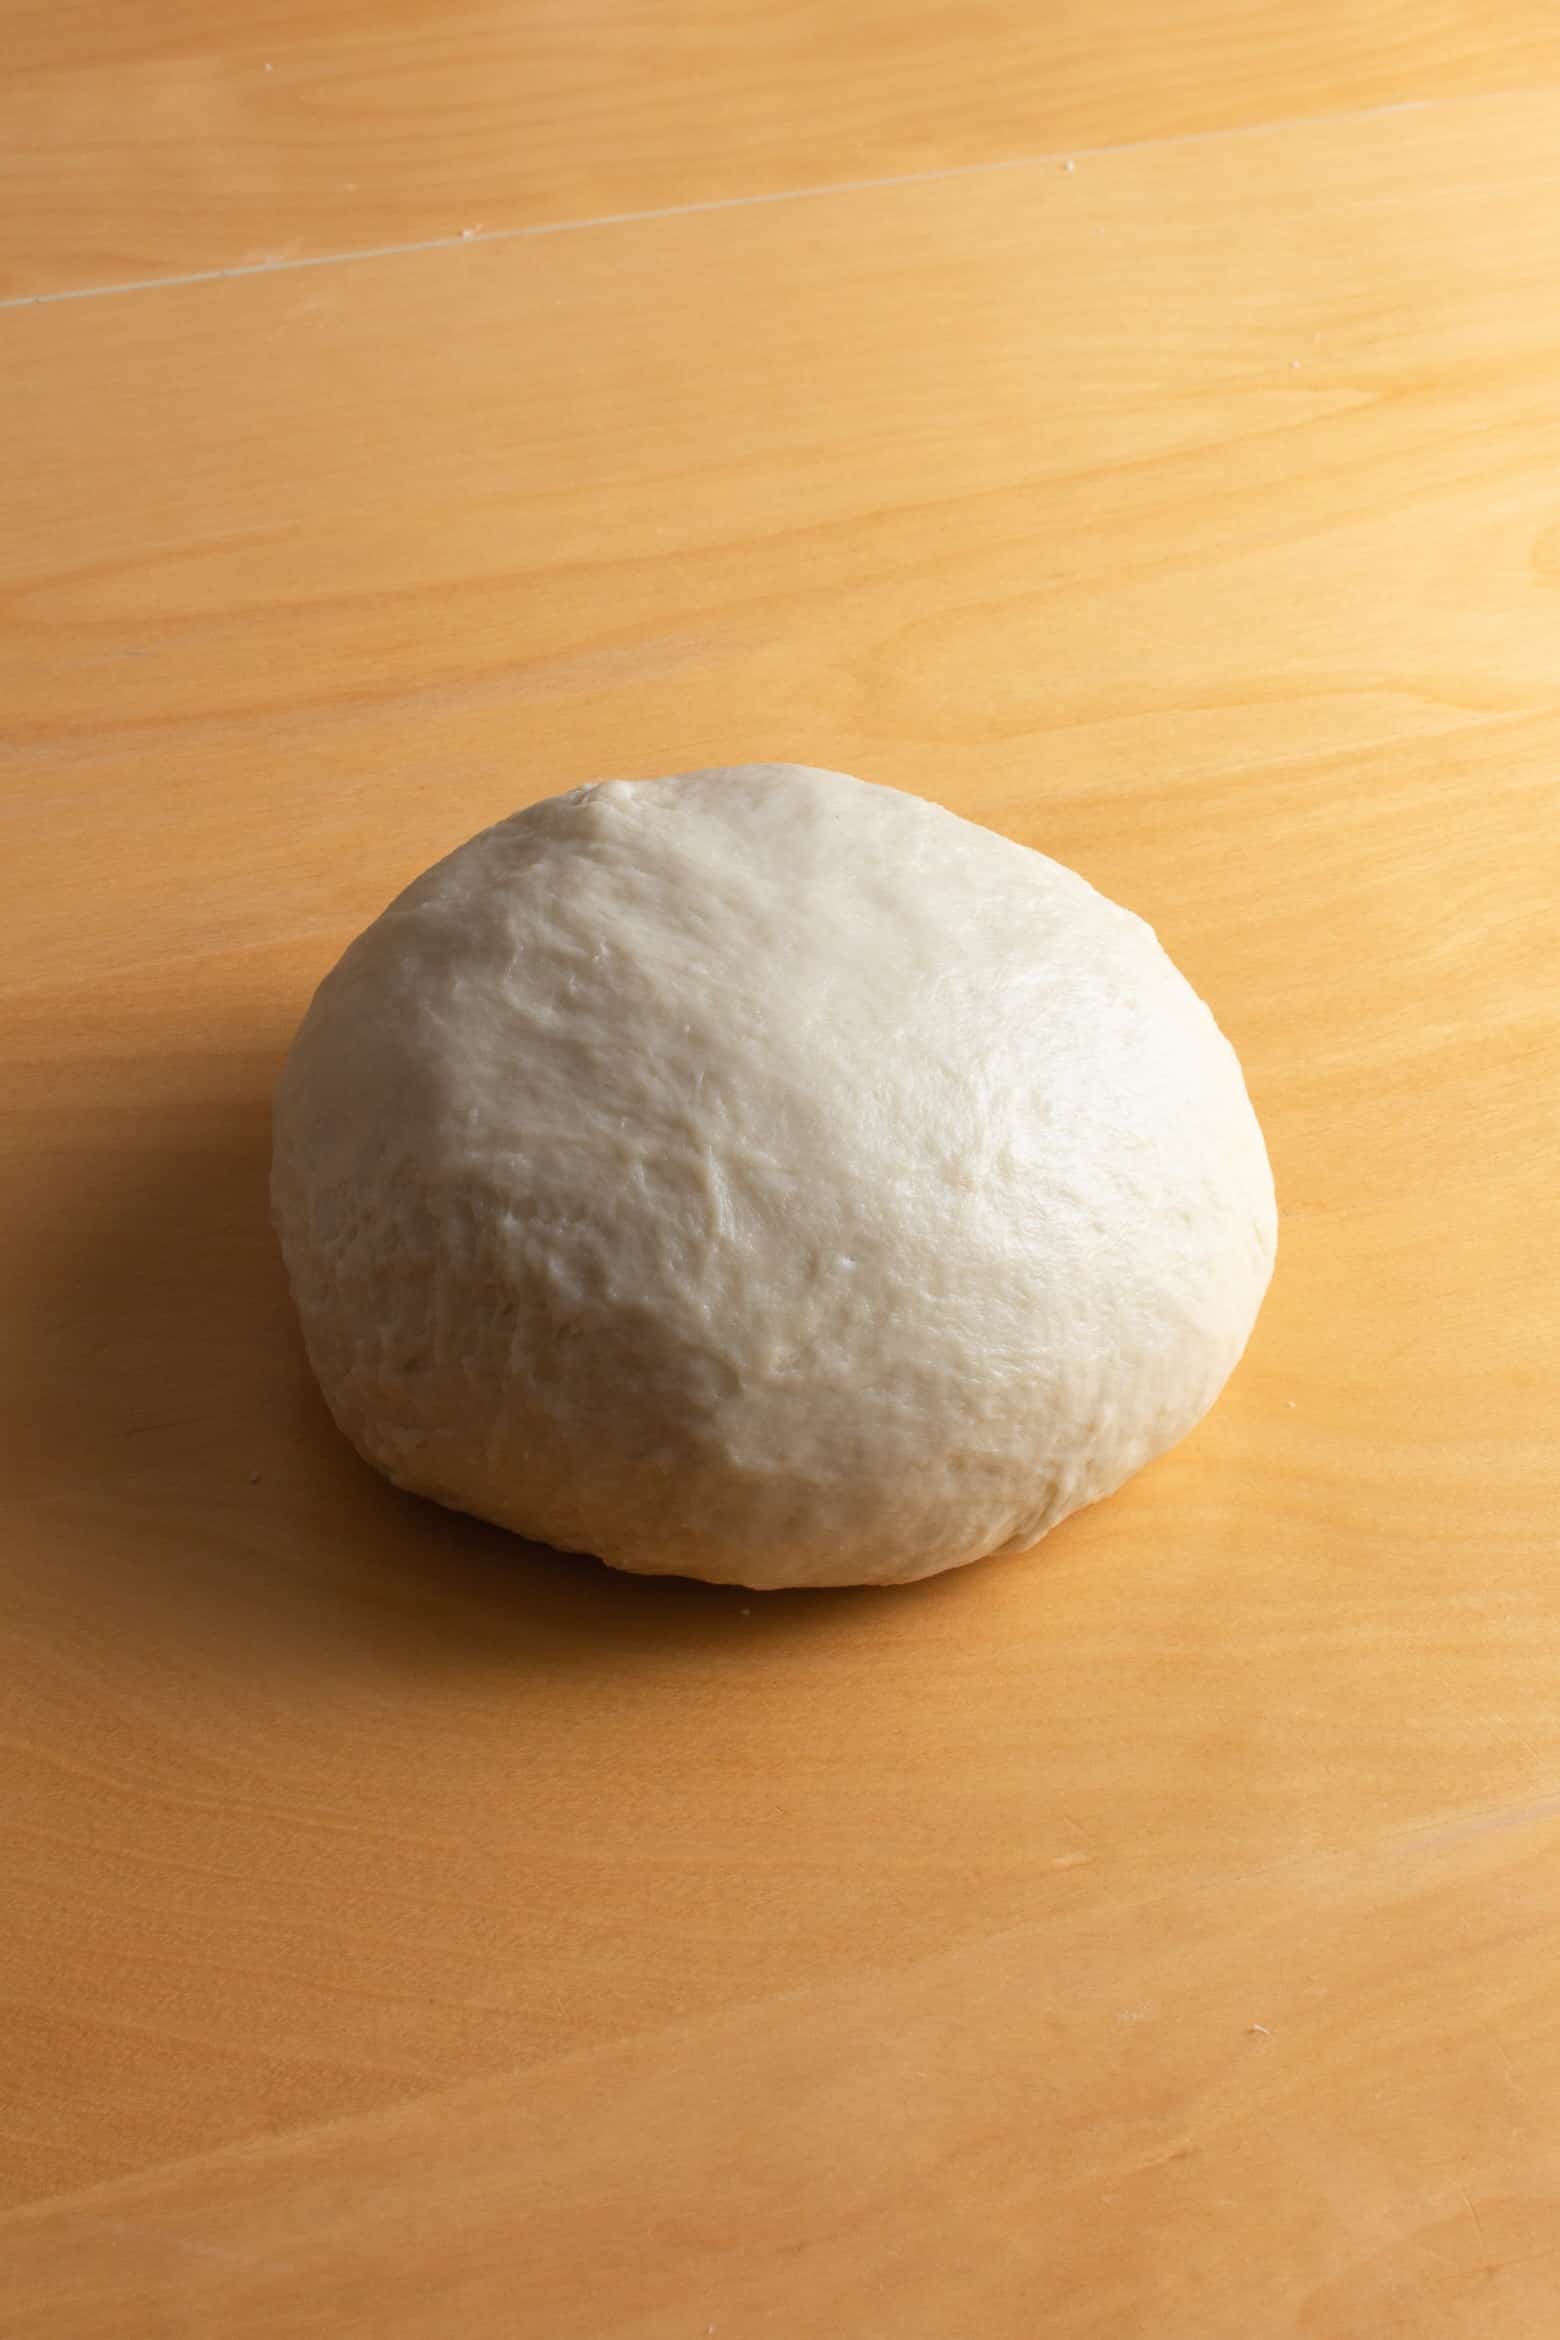 Kneaded ball of bread dough